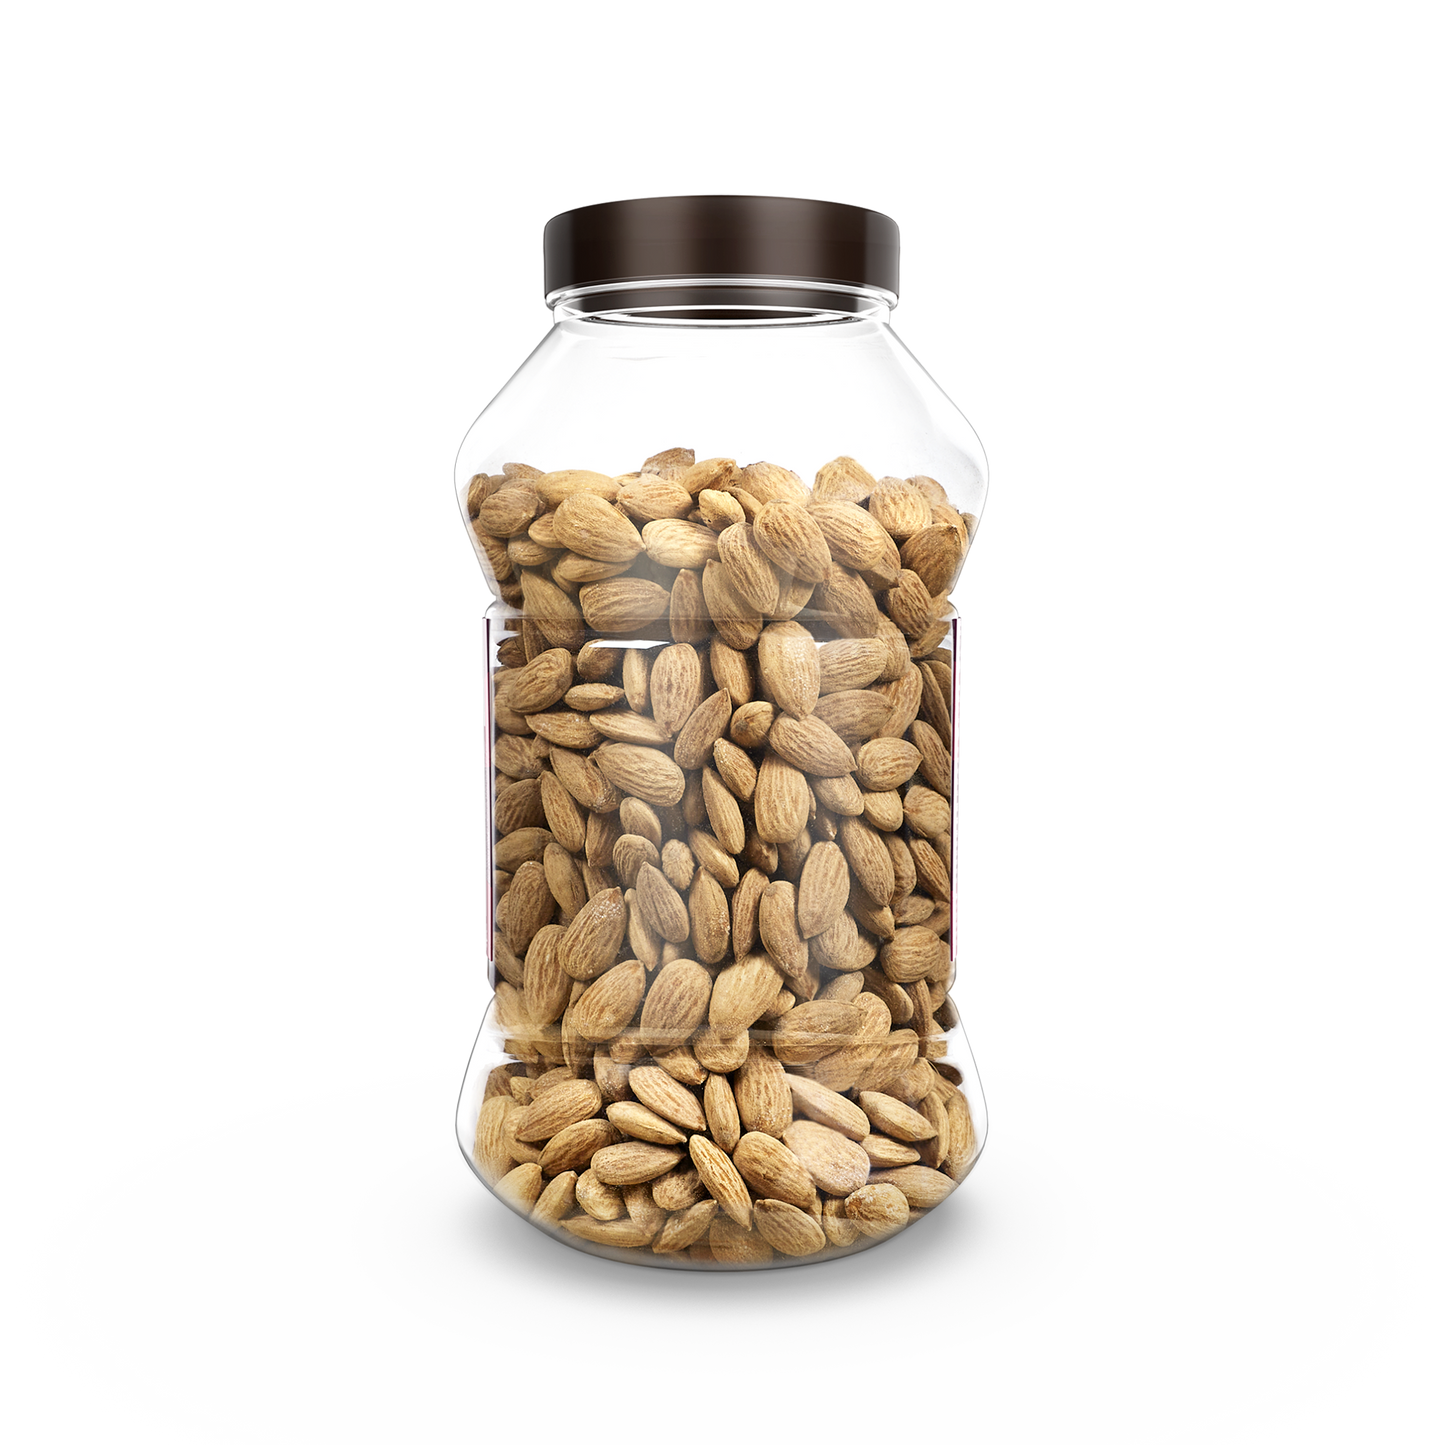 SAO Foods Salted Roasted Almonds 1 kg